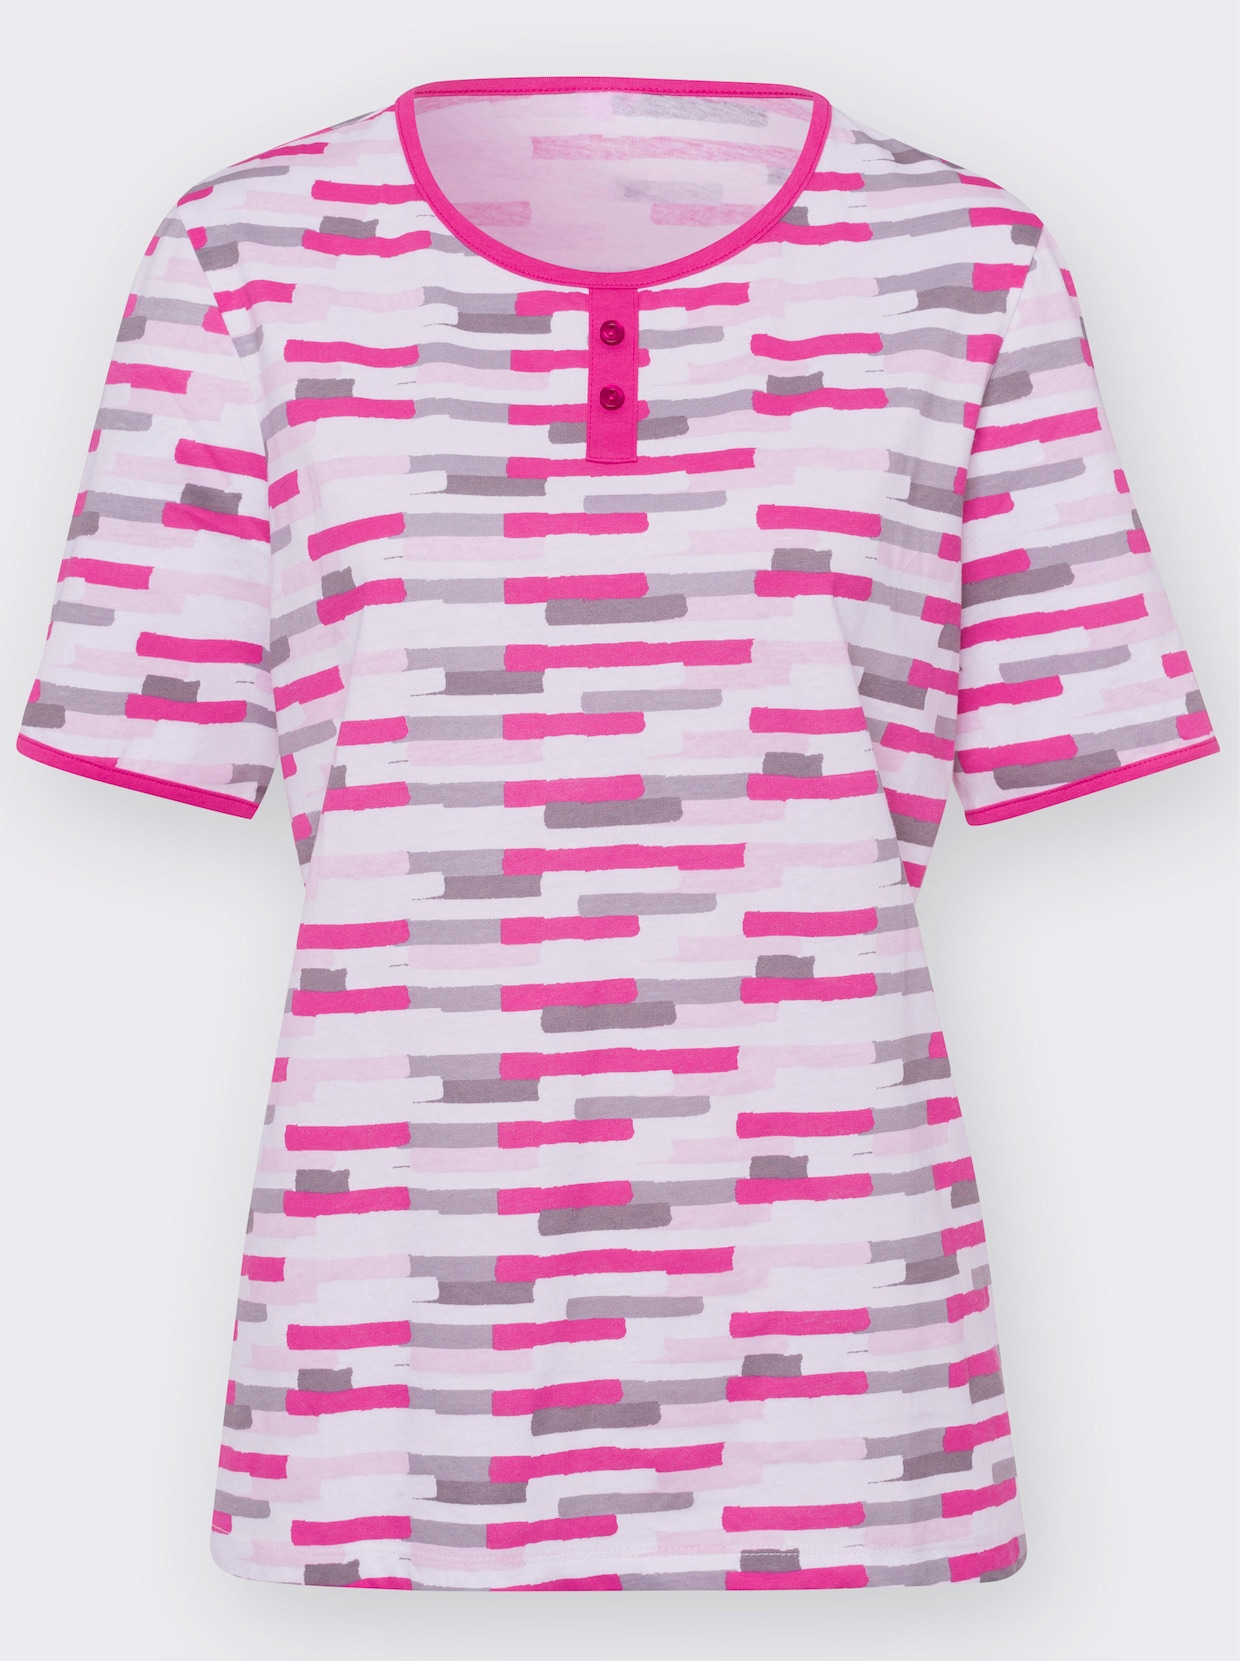 Capri-pyjama - wit/roze geprint